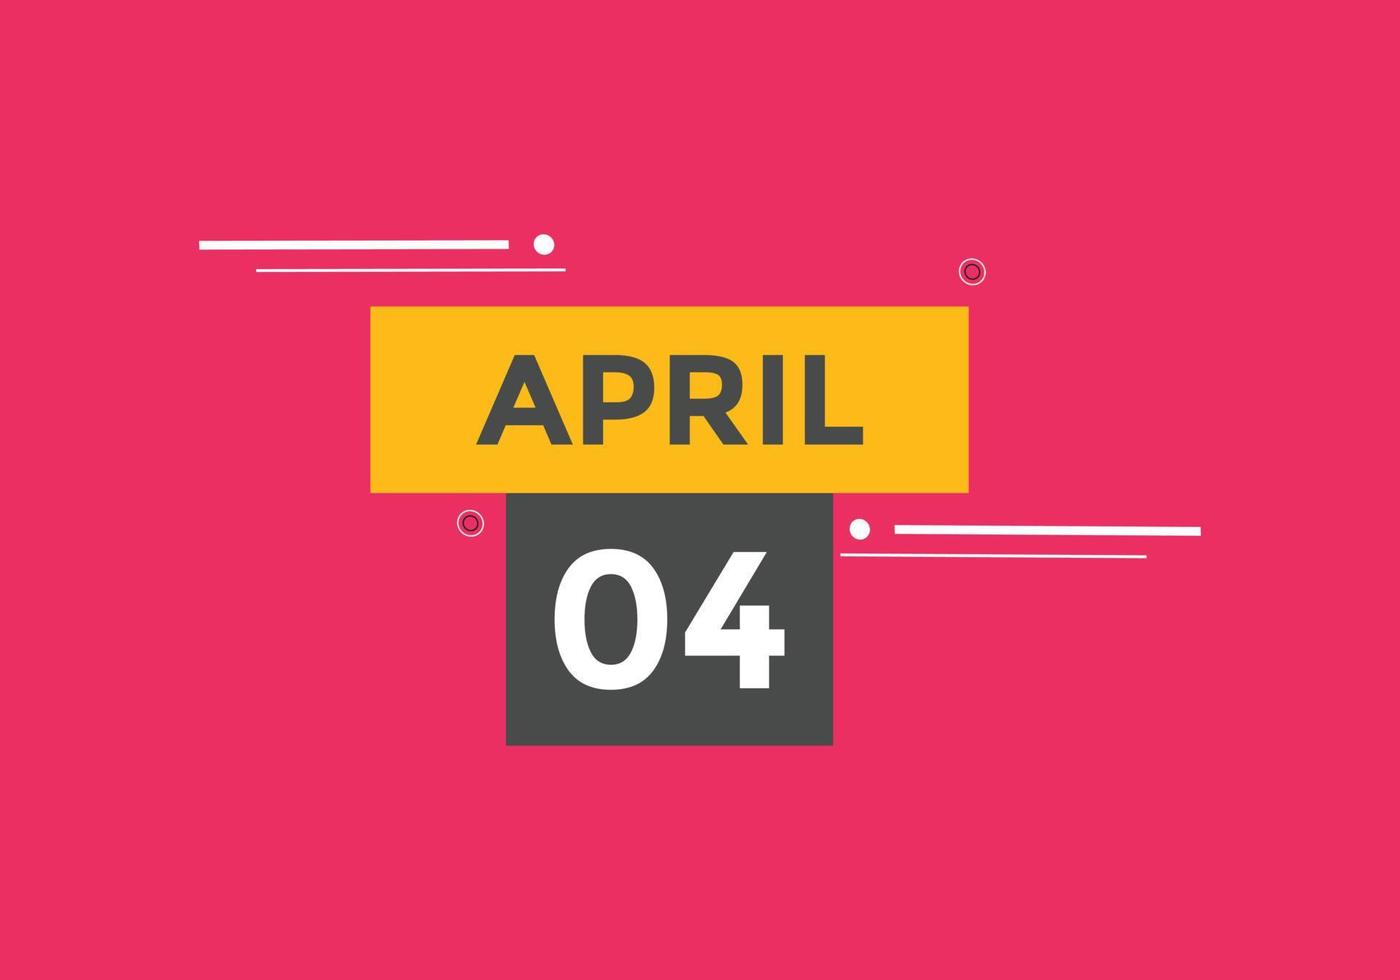 april 4 calendar reminder. 4th april daily calendar icon template. Calendar 4th april icon Design template. Vector illustration